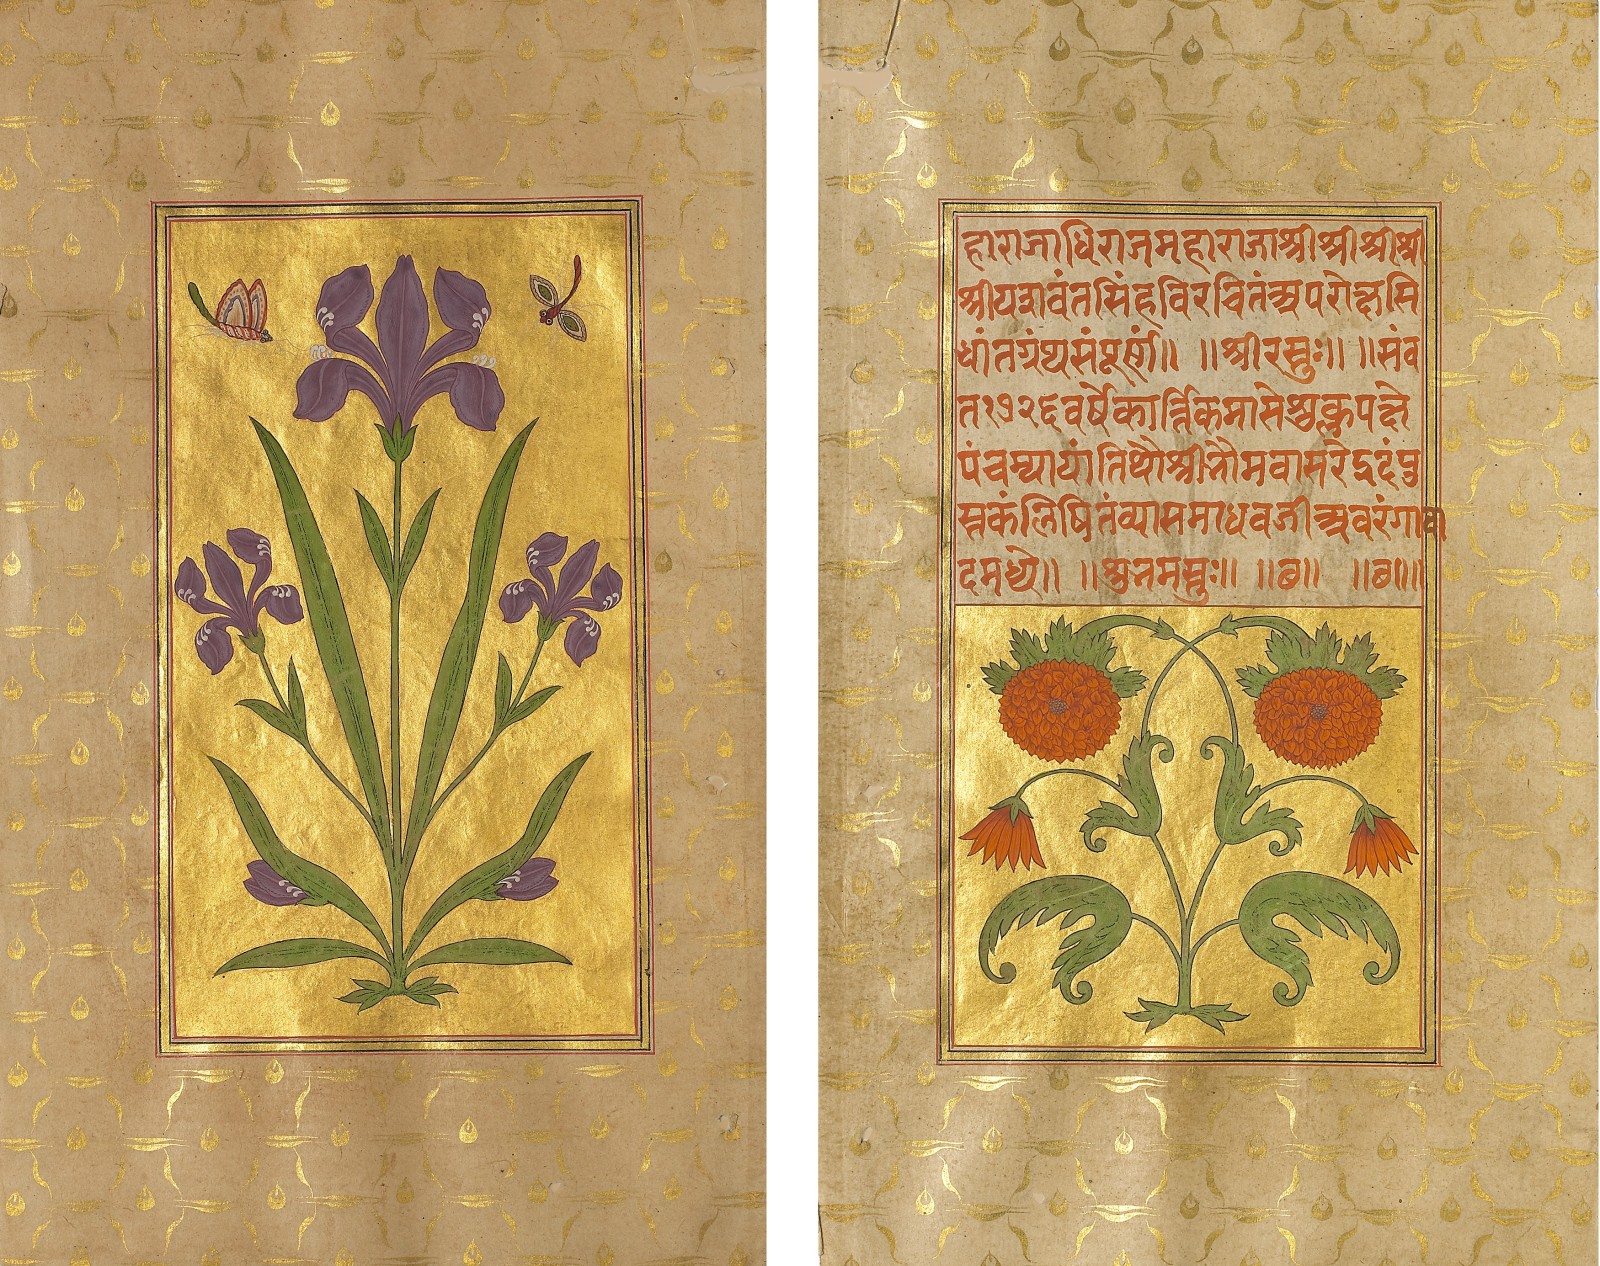 An Iris, Double -sided folio from the Aparokshasiddhanta of Maharaja Jasvant Singh of Jodhpur, Aurangabad, dated 1669-70